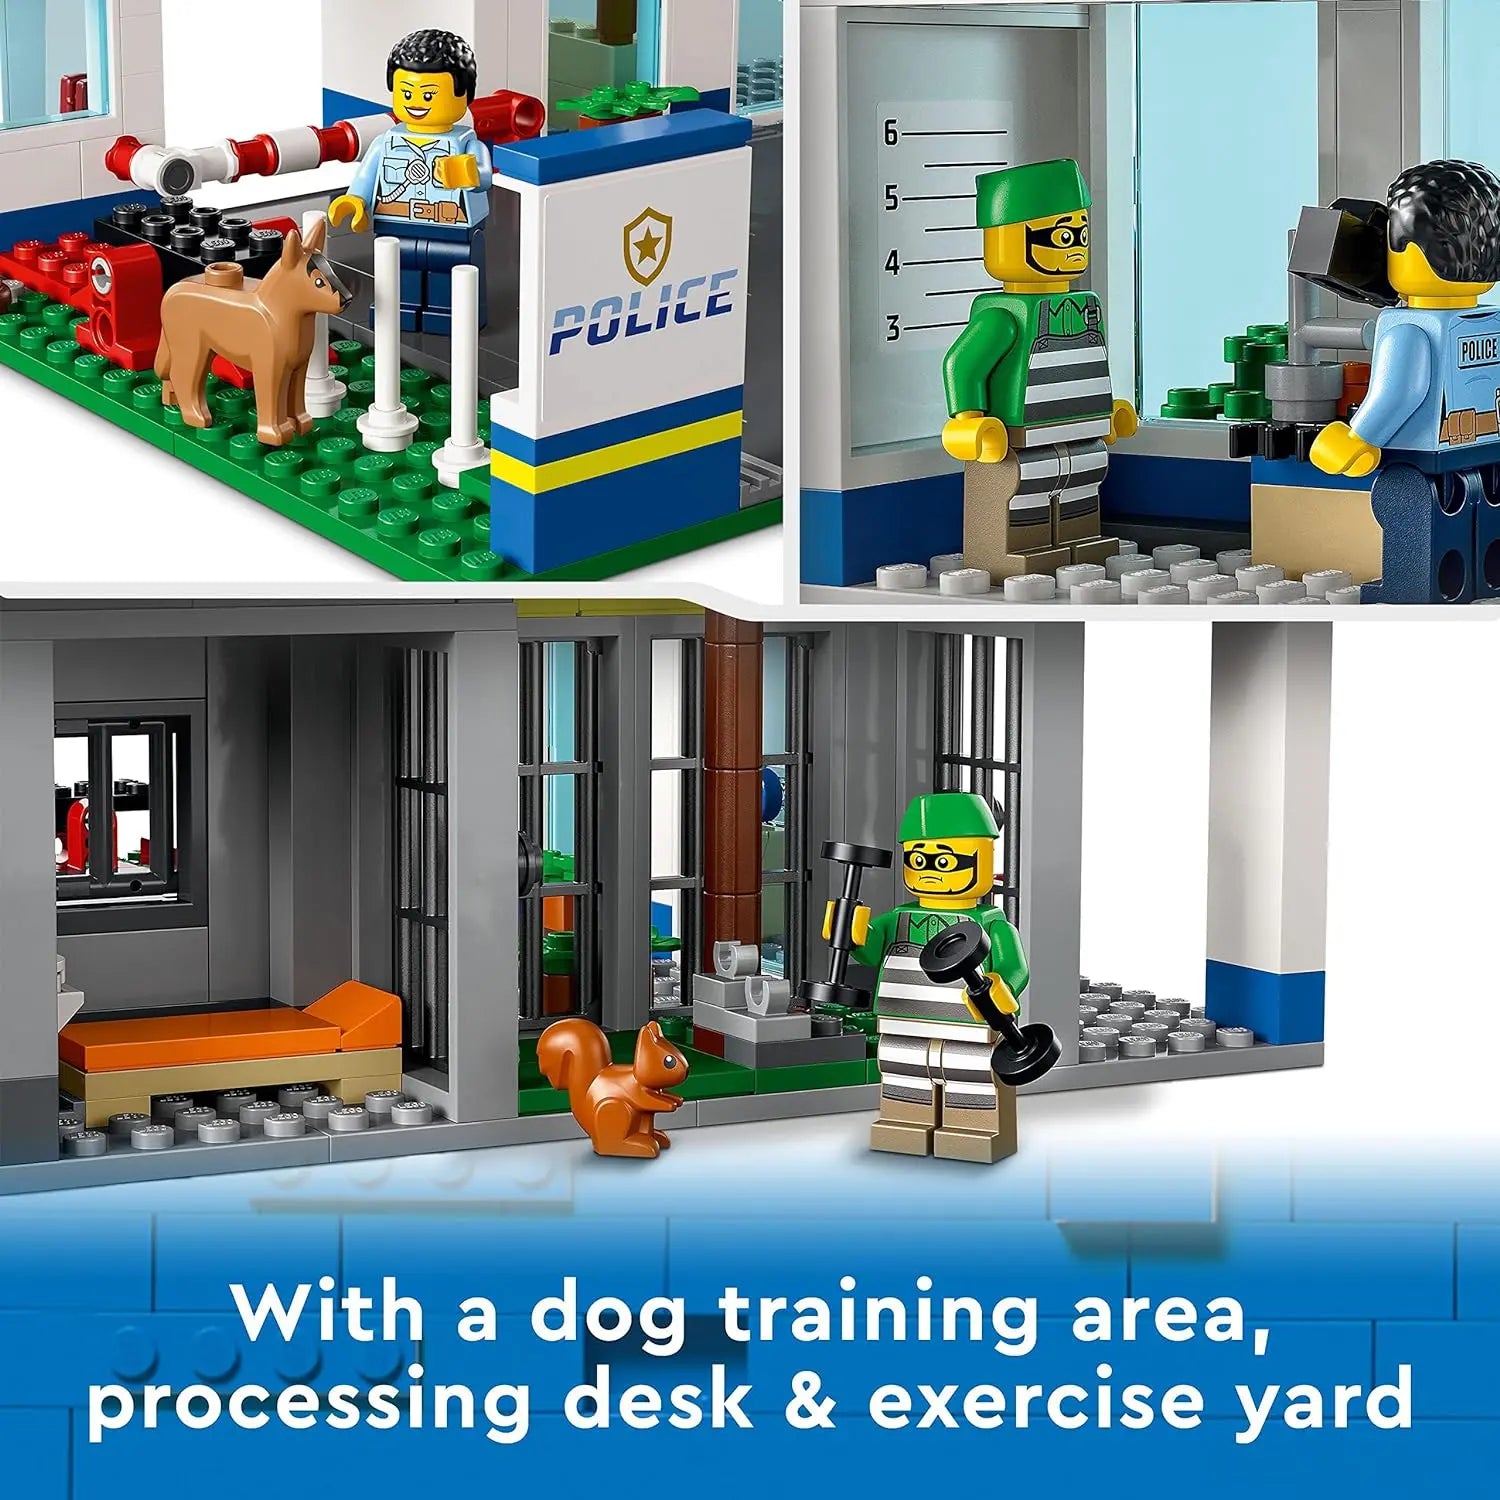 lego 60316 LEGO City Le commissariat de Police lego